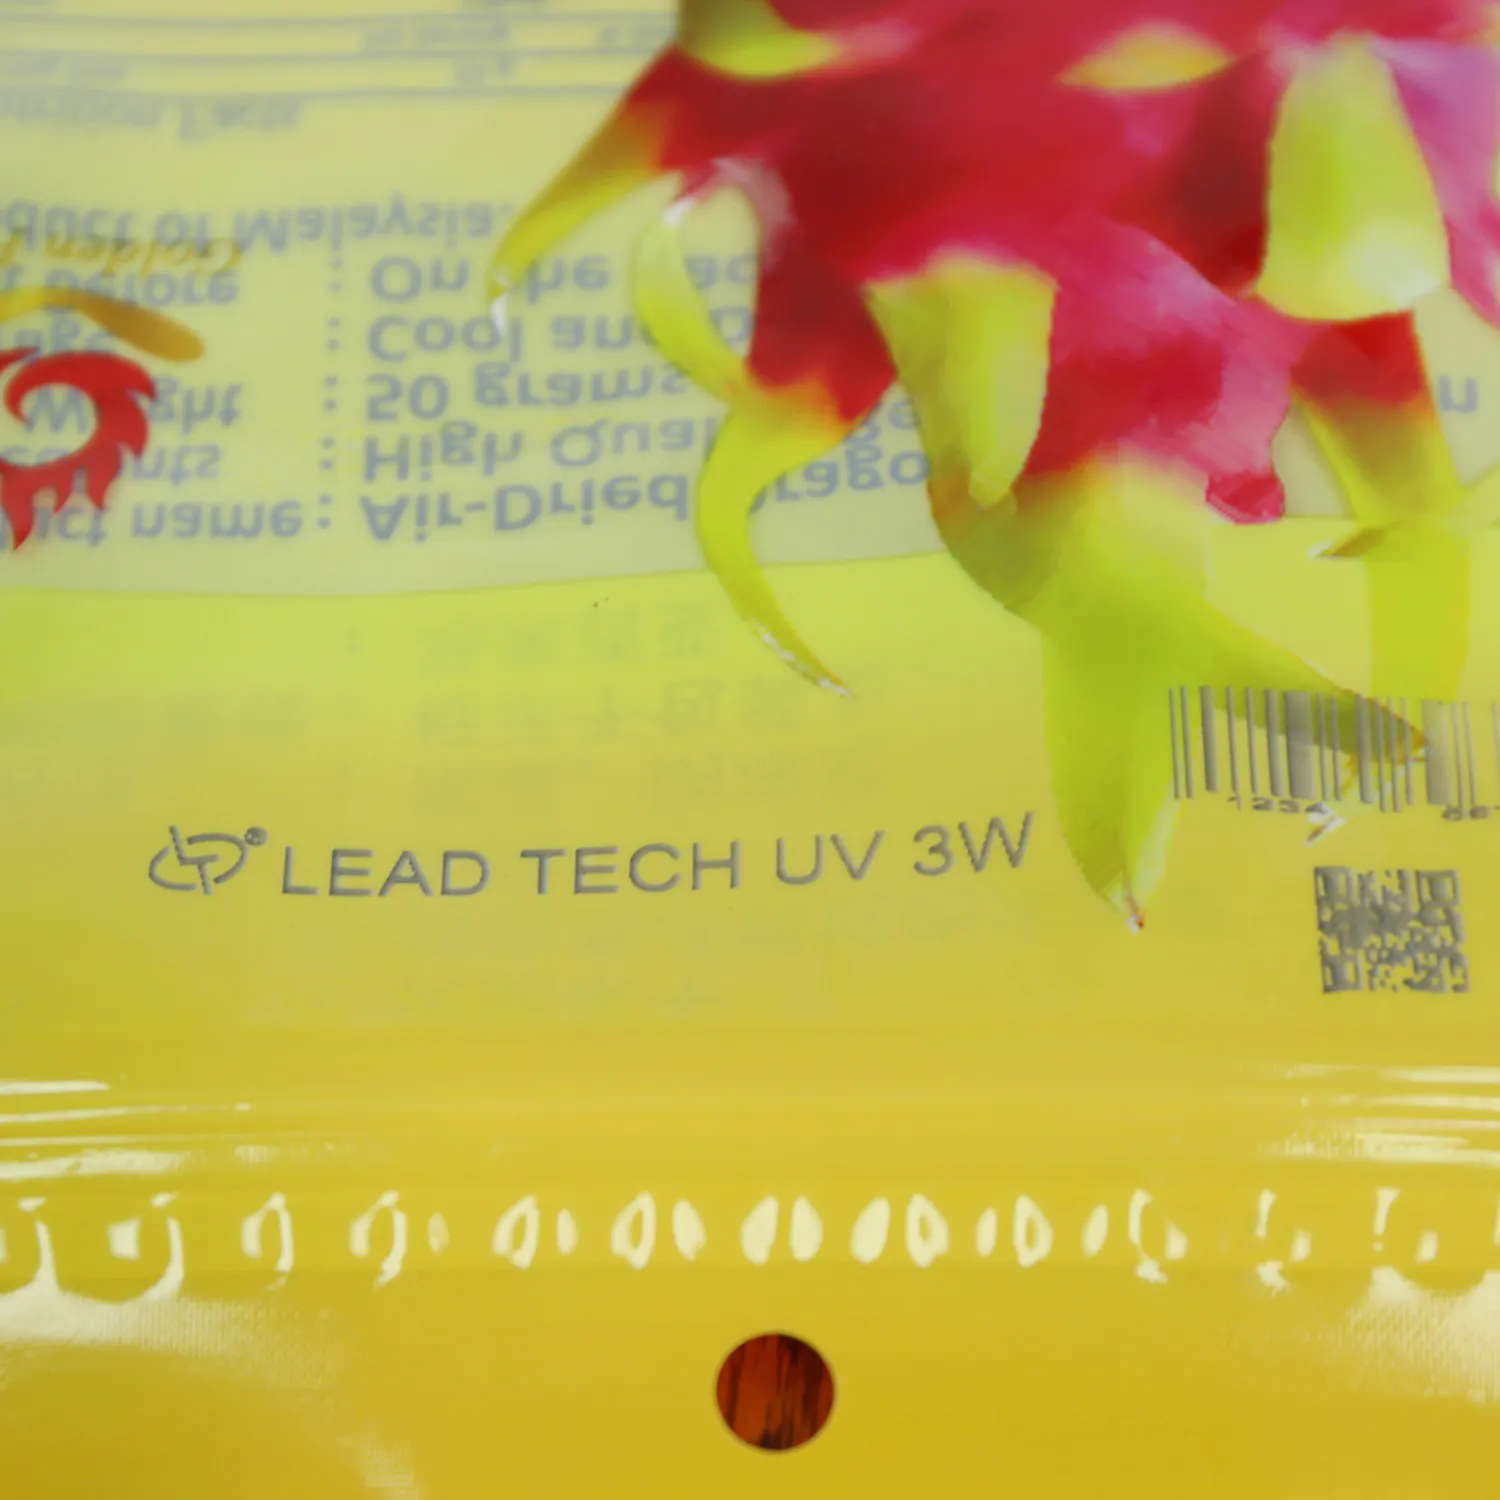 Lead Tech Lt8003u/Lt8005u UV 3W/5W Digital High Speed Unique Design Laser Printer for Plastic, Metal Printing